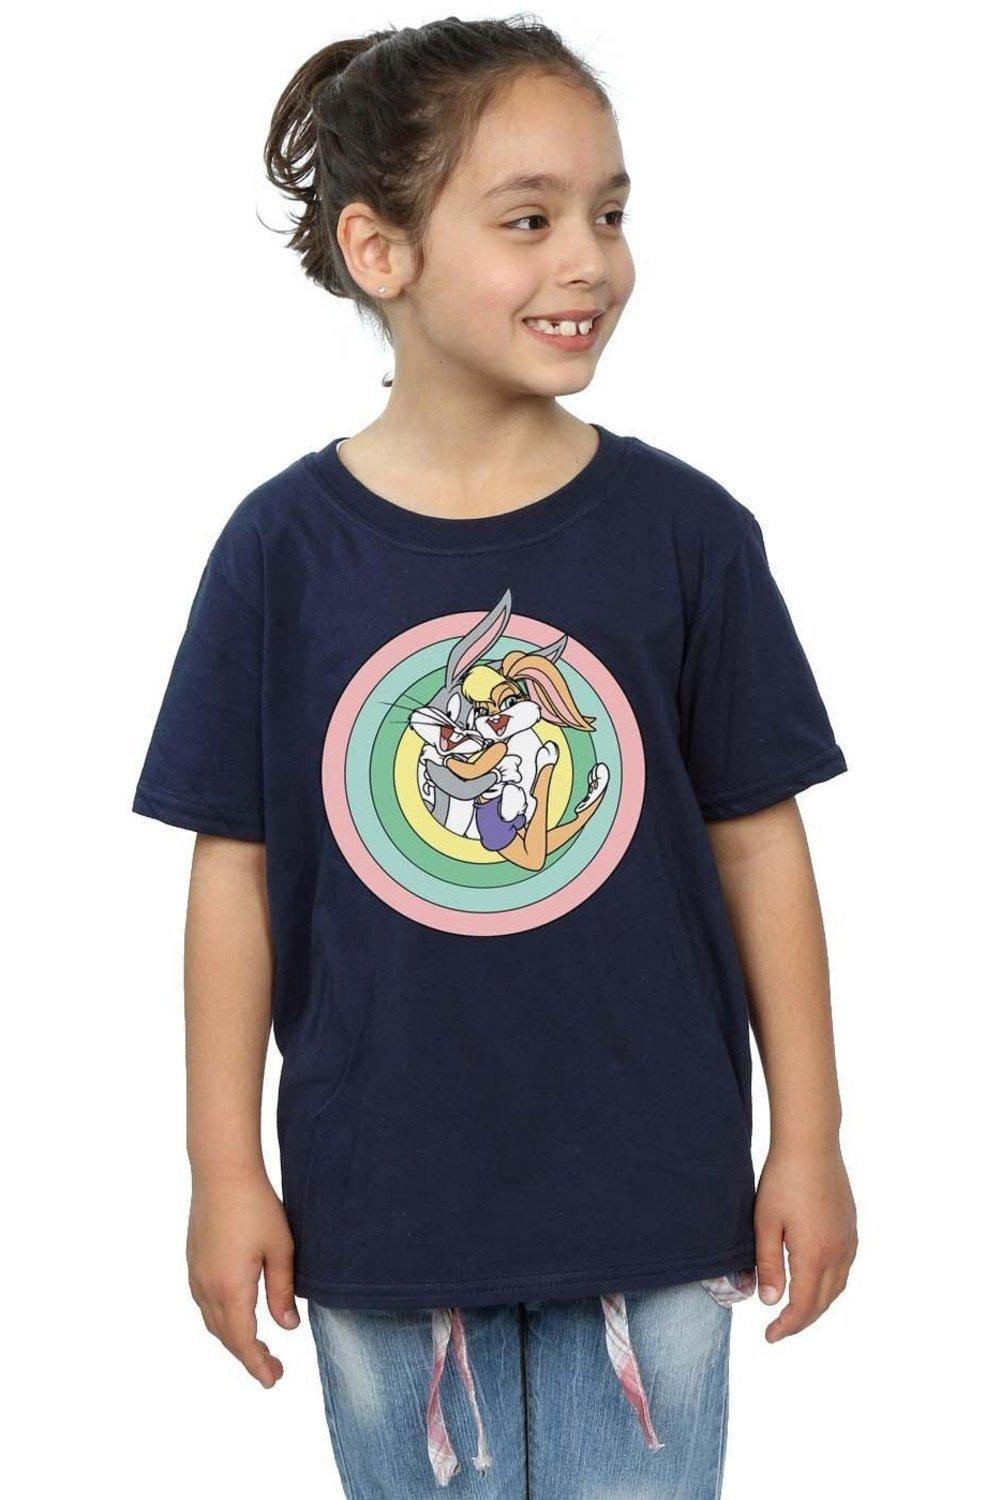 Bugs Bunny And Lola Bunny Cotton T-Shirt